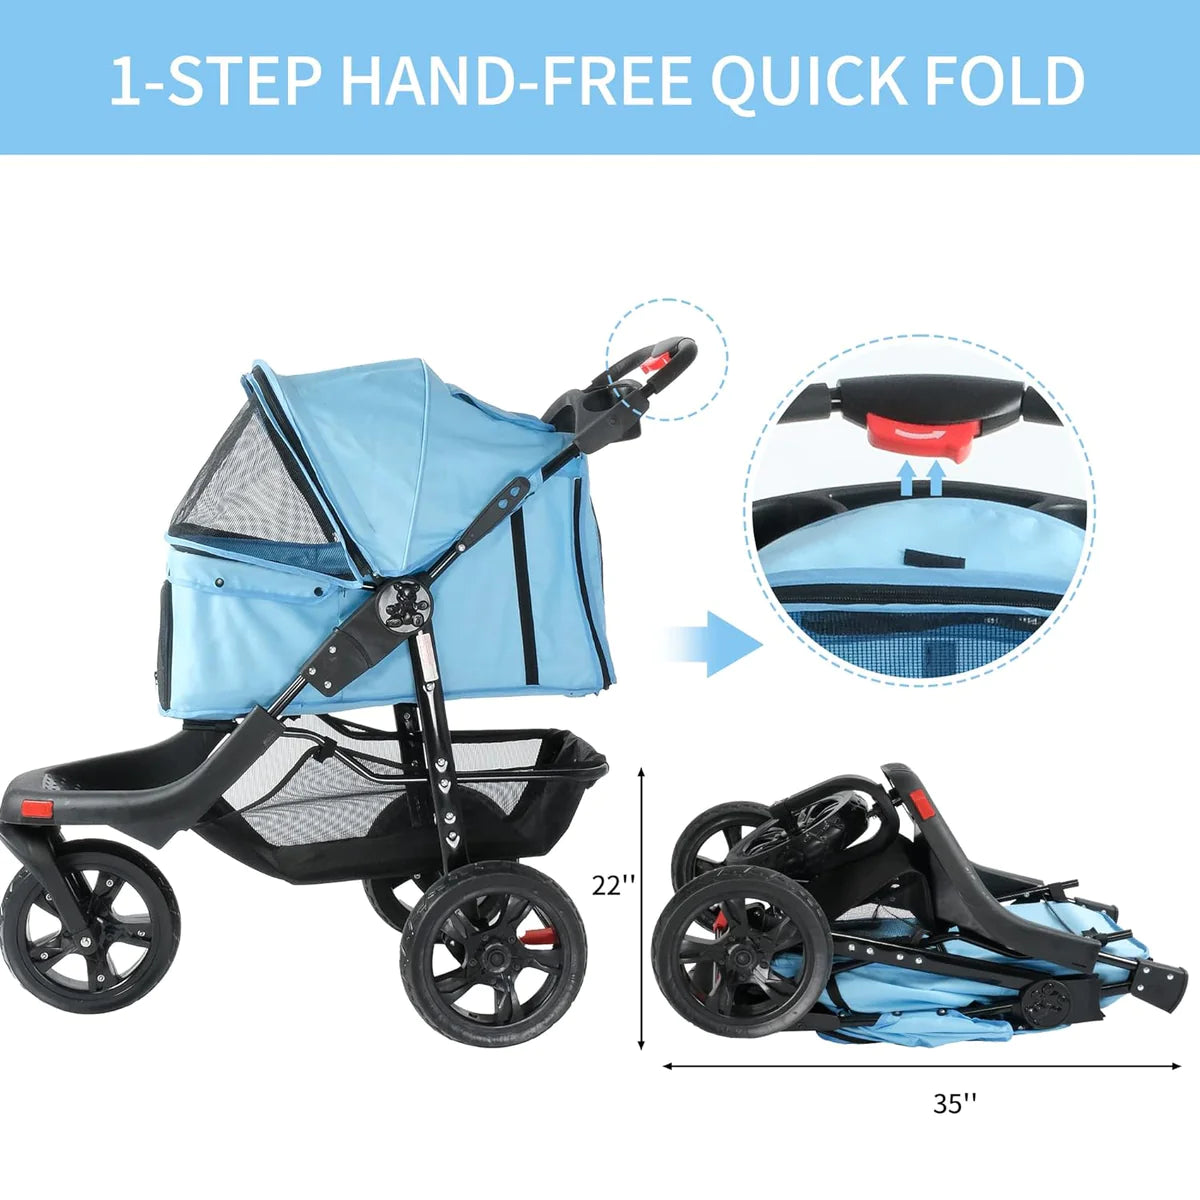 3-Wheel Folding Dog Stroller Pet Travel Carrier with Cup Holder and Storage Basket, Blue